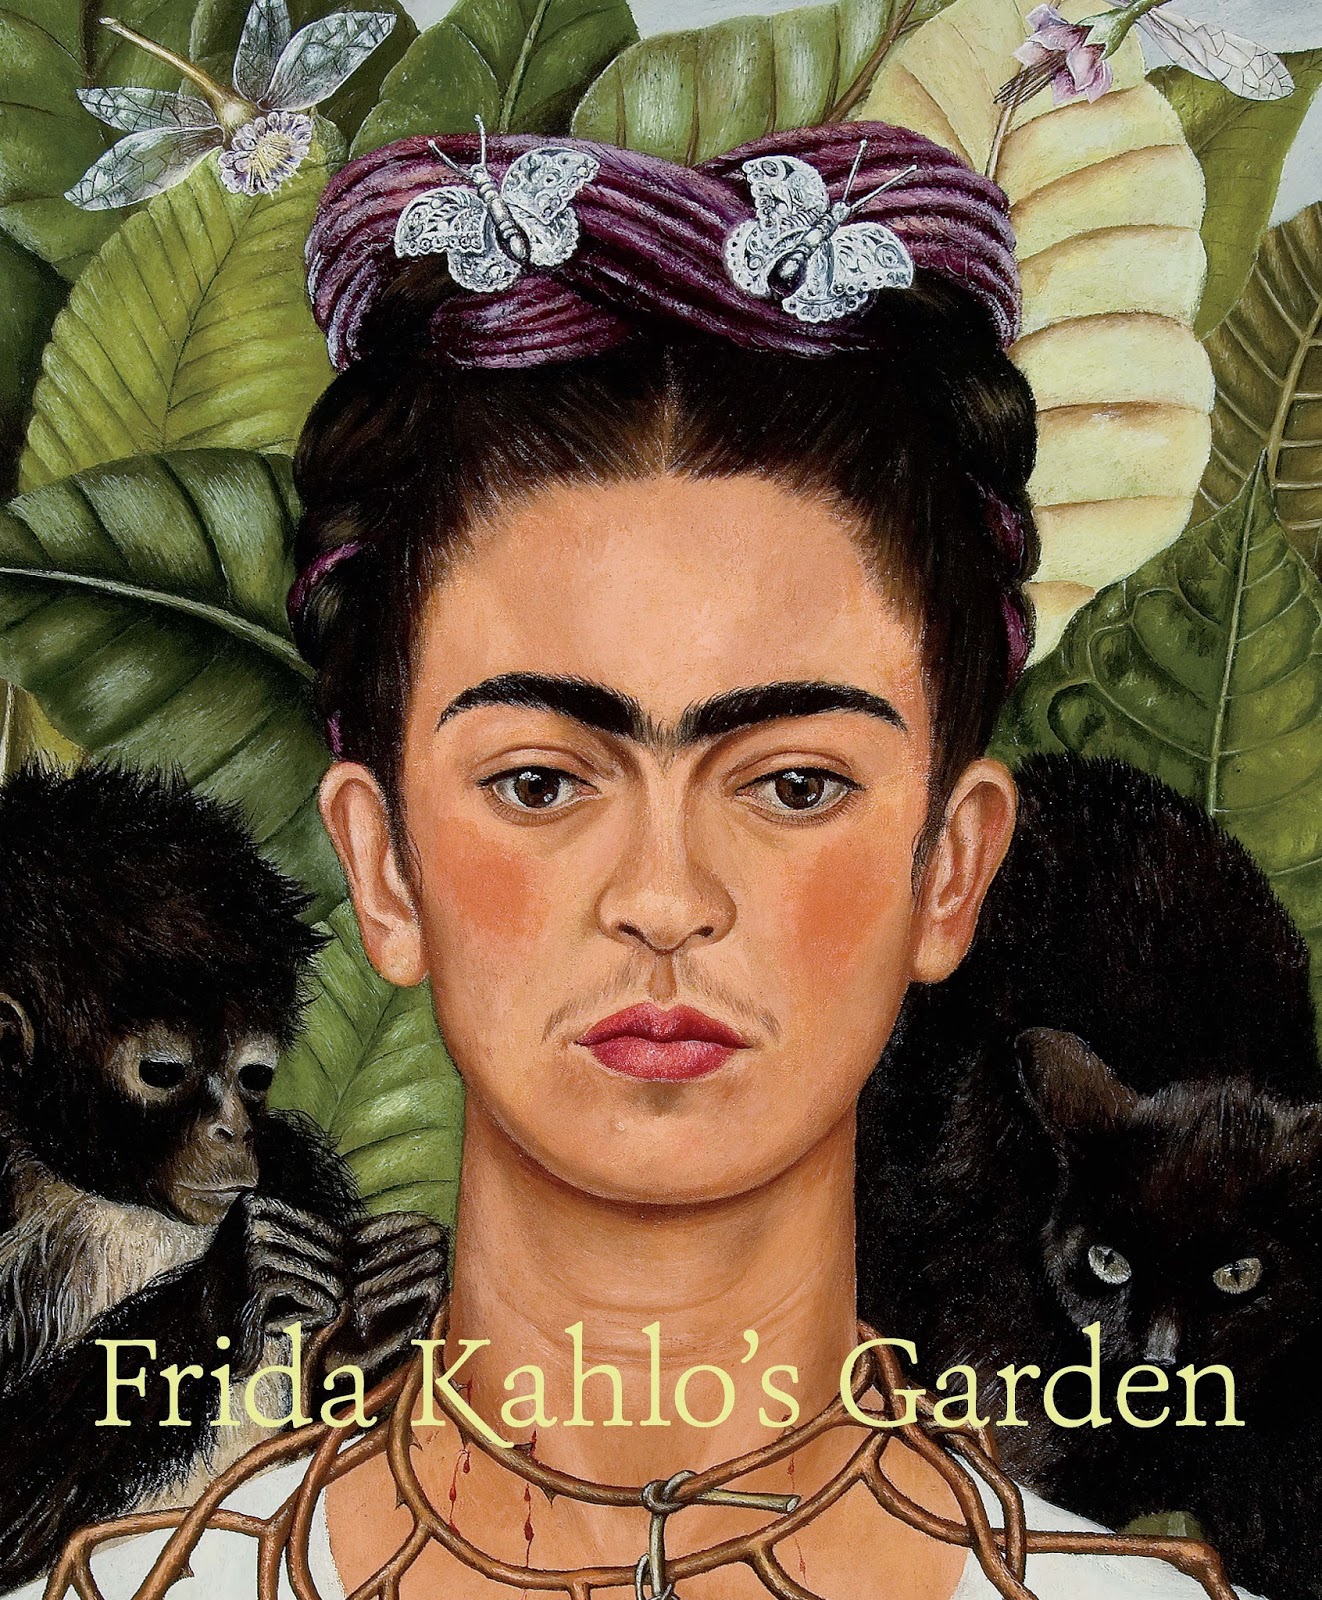 Frida Kahlo Figurine. Blue. Limited Edition